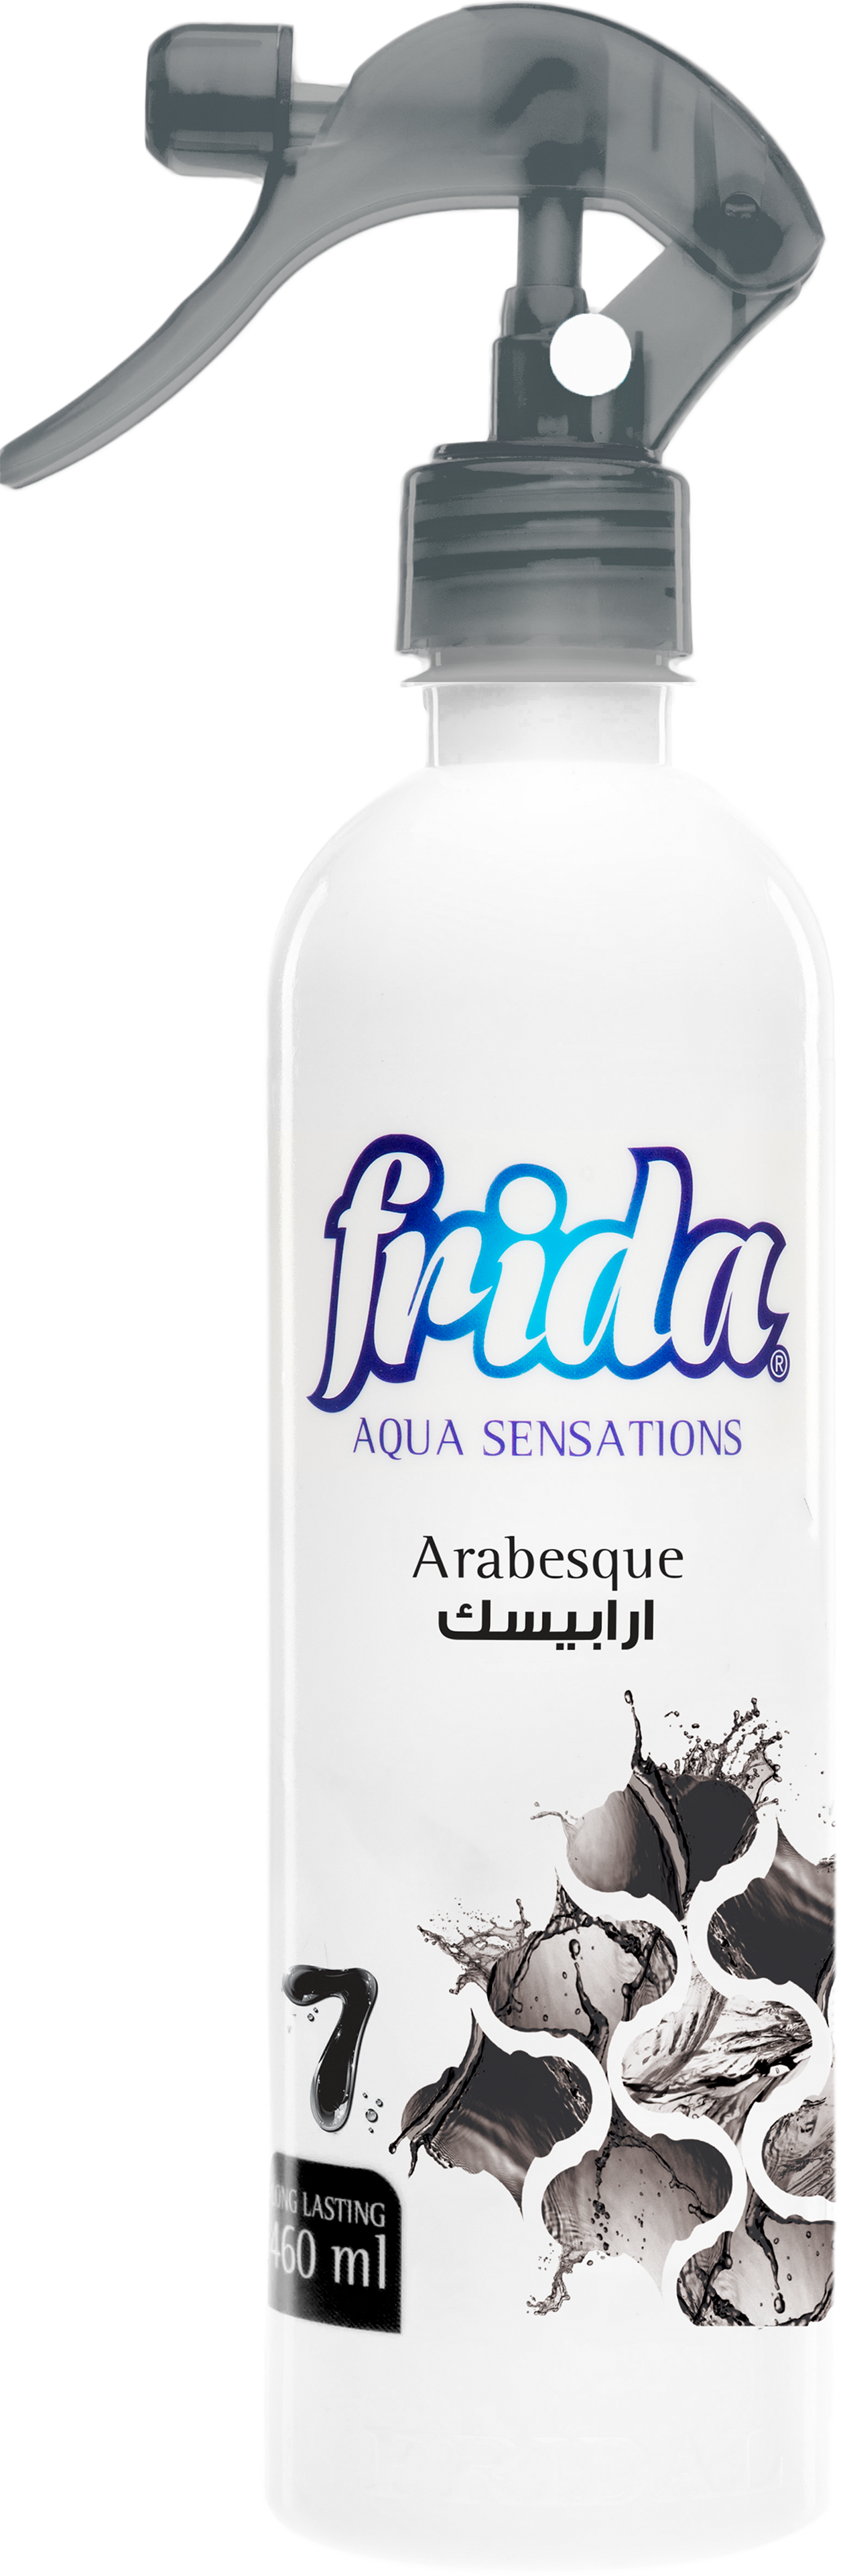 Frida Aqua Sensations "Arabesque"